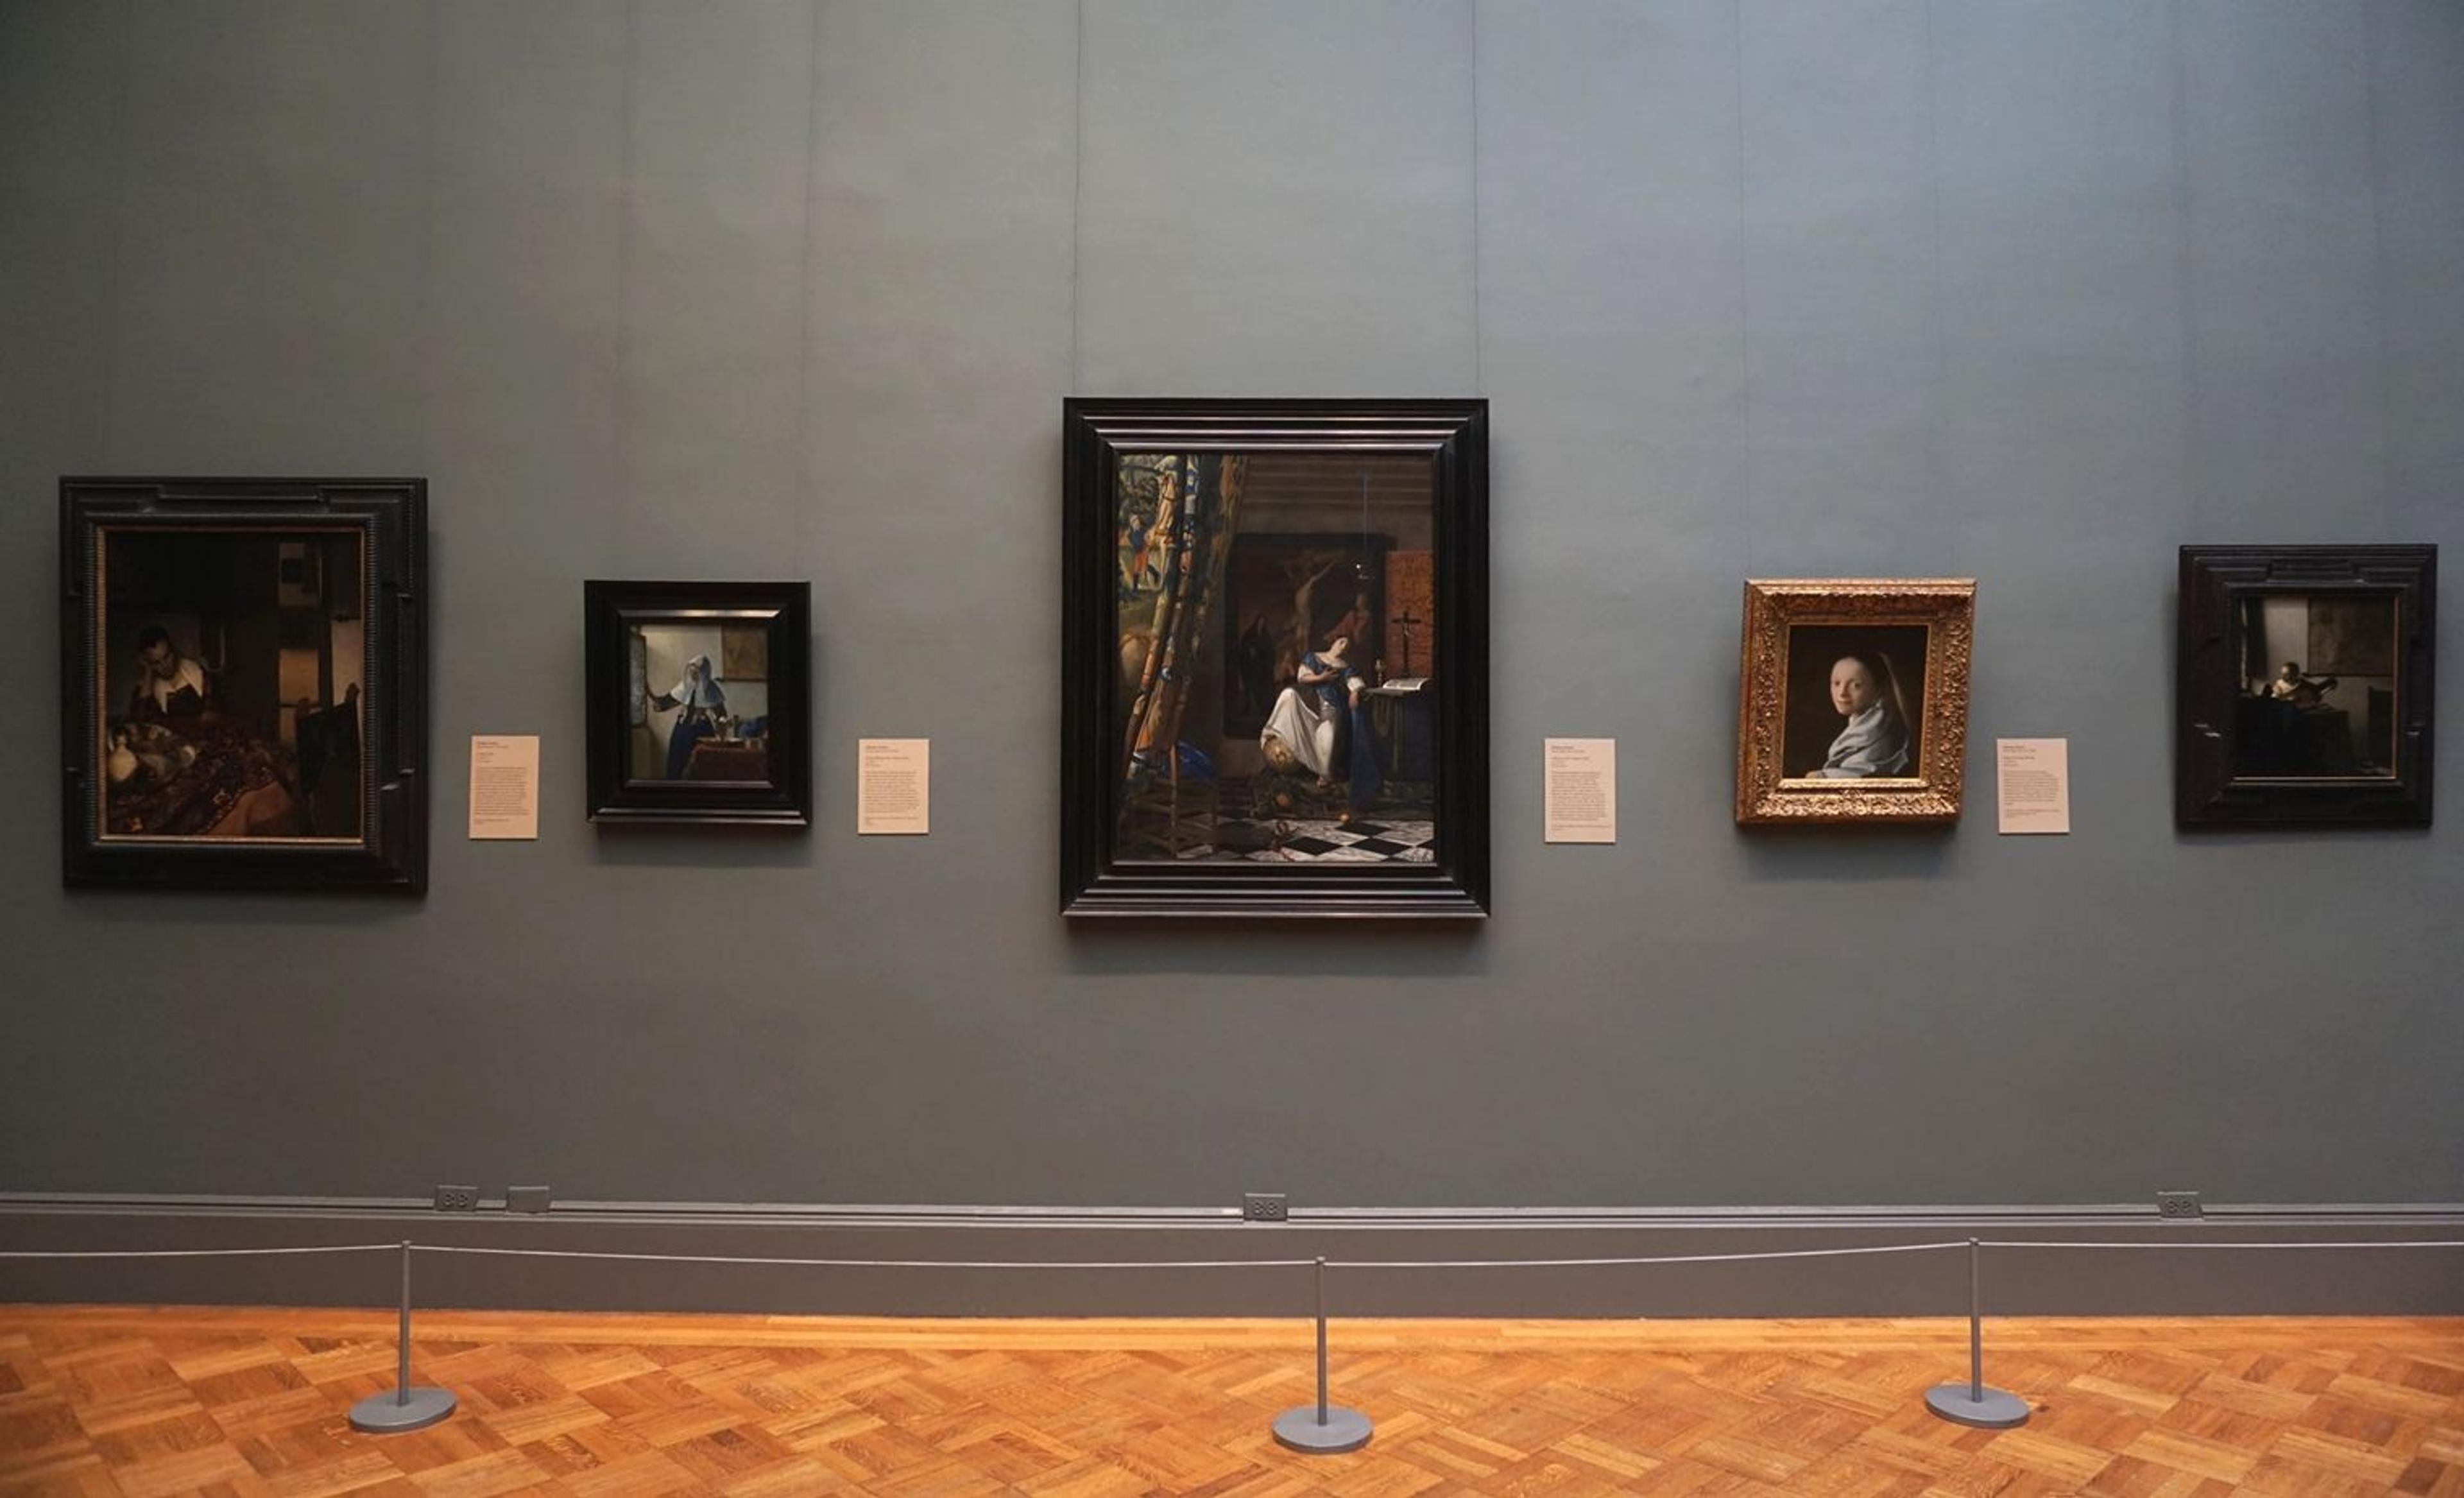 View of a Met gallery wall showing three masterpiece paintings by Johannes Vermeer